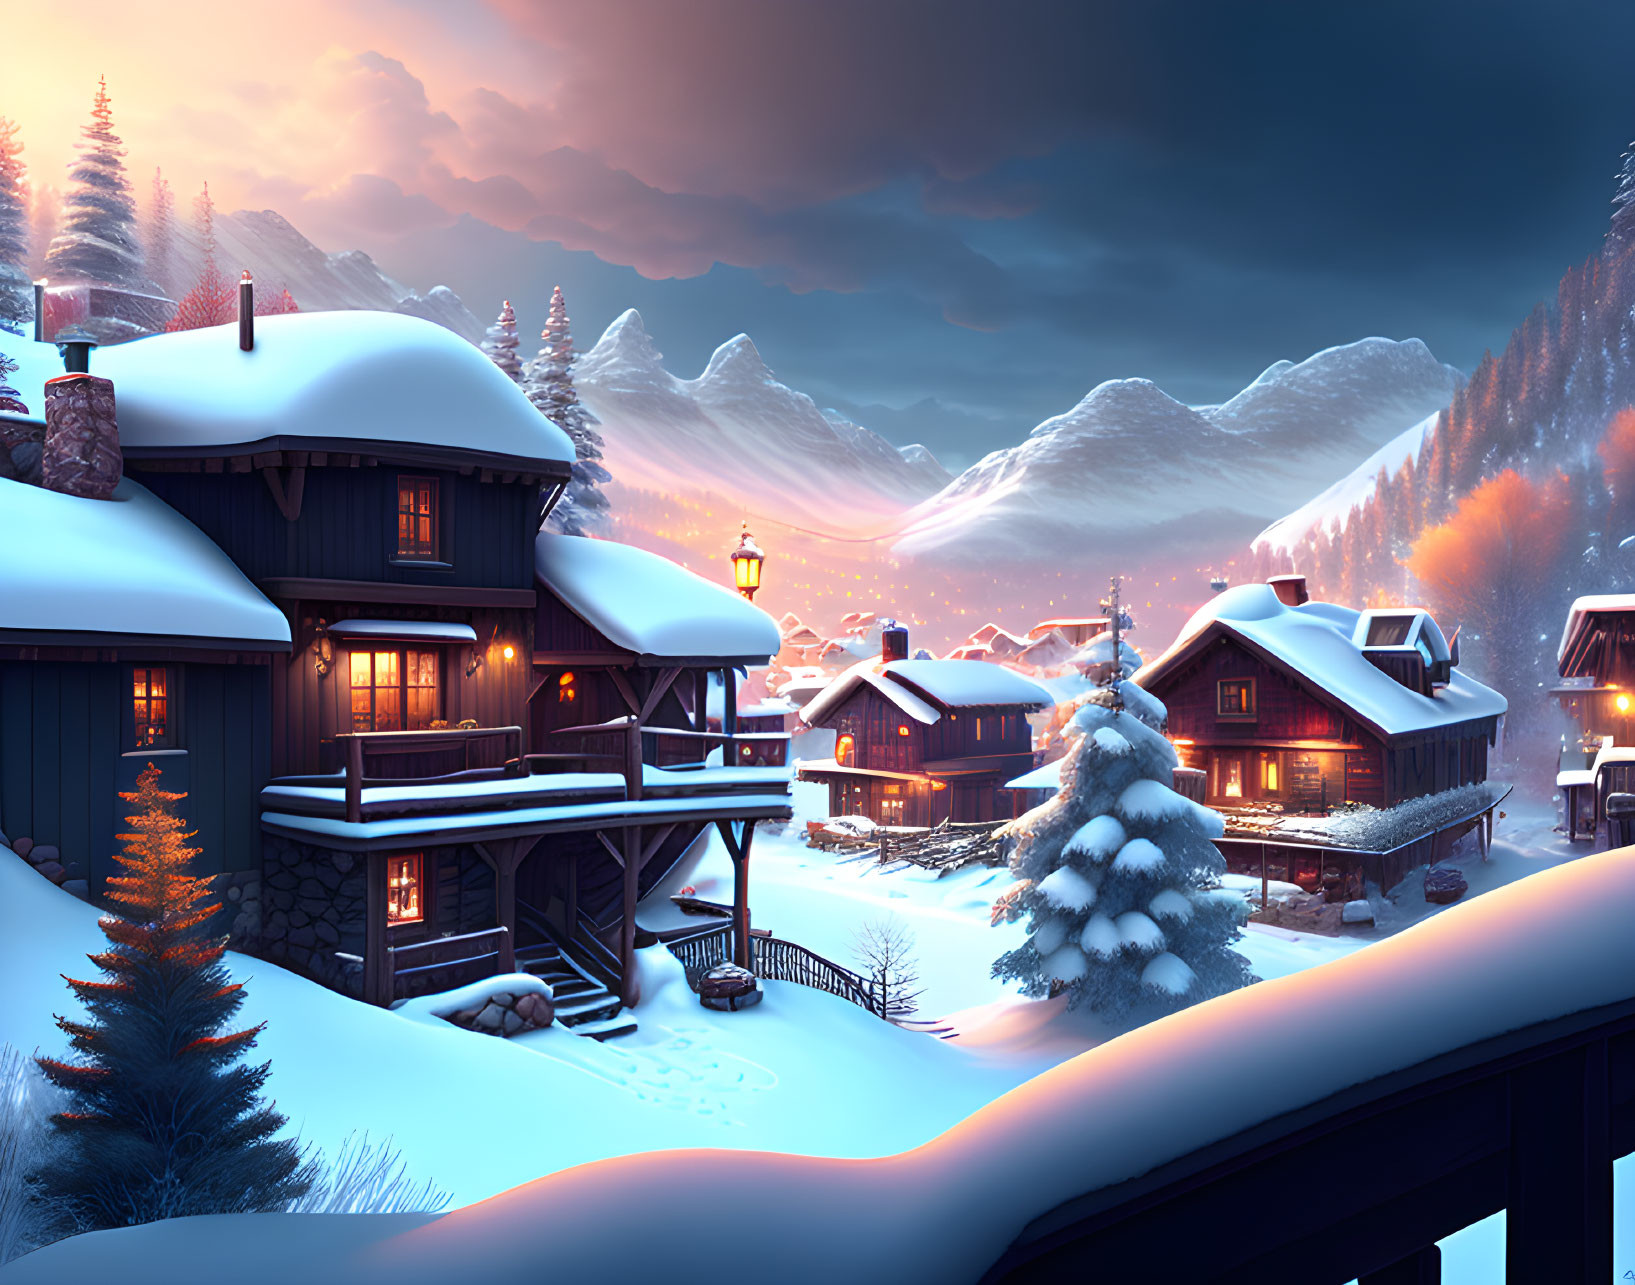 Snowy mountain village at dusk: illuminated houses, snowy pine tree, glowing street lamps, twilight sky